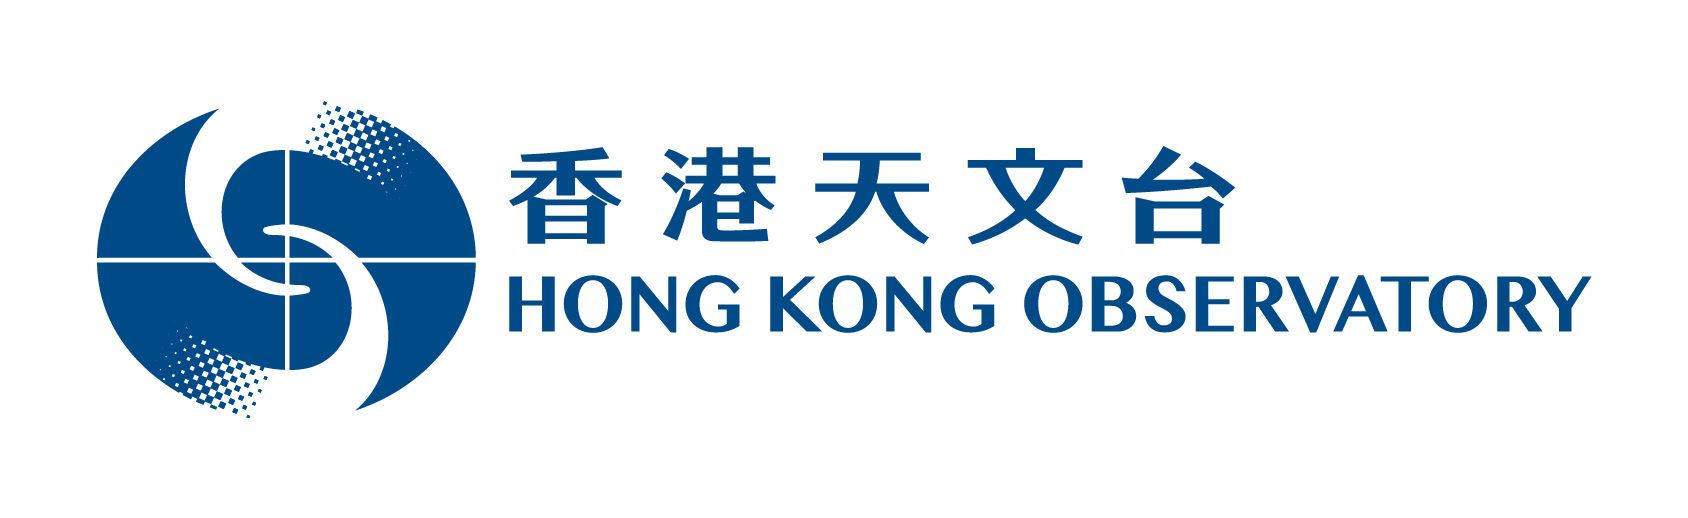 Hong Kong Observatory logo